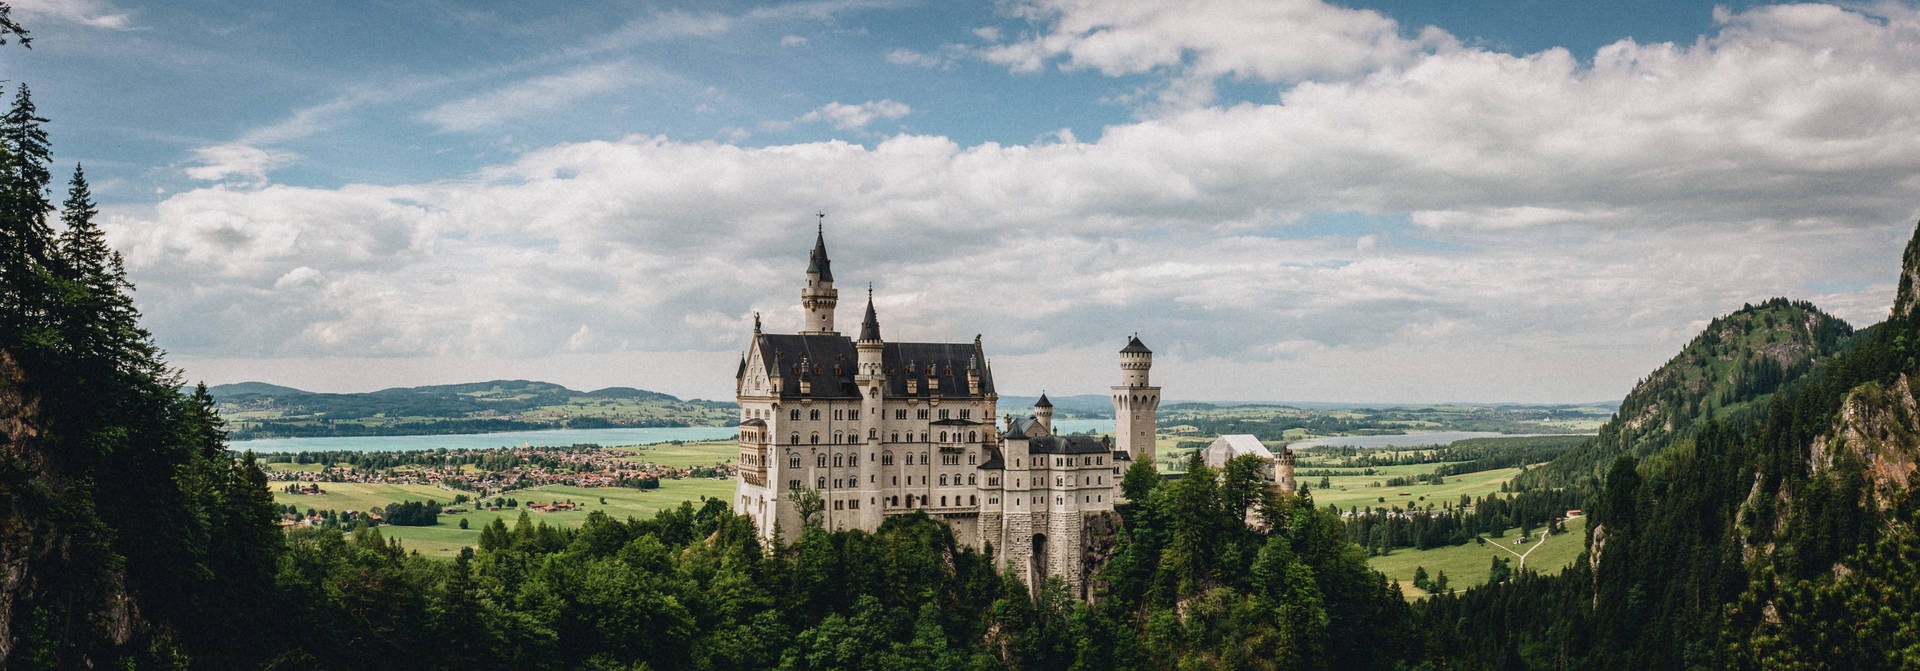 Castle Neuschwanstein Germany Widescreen Picture